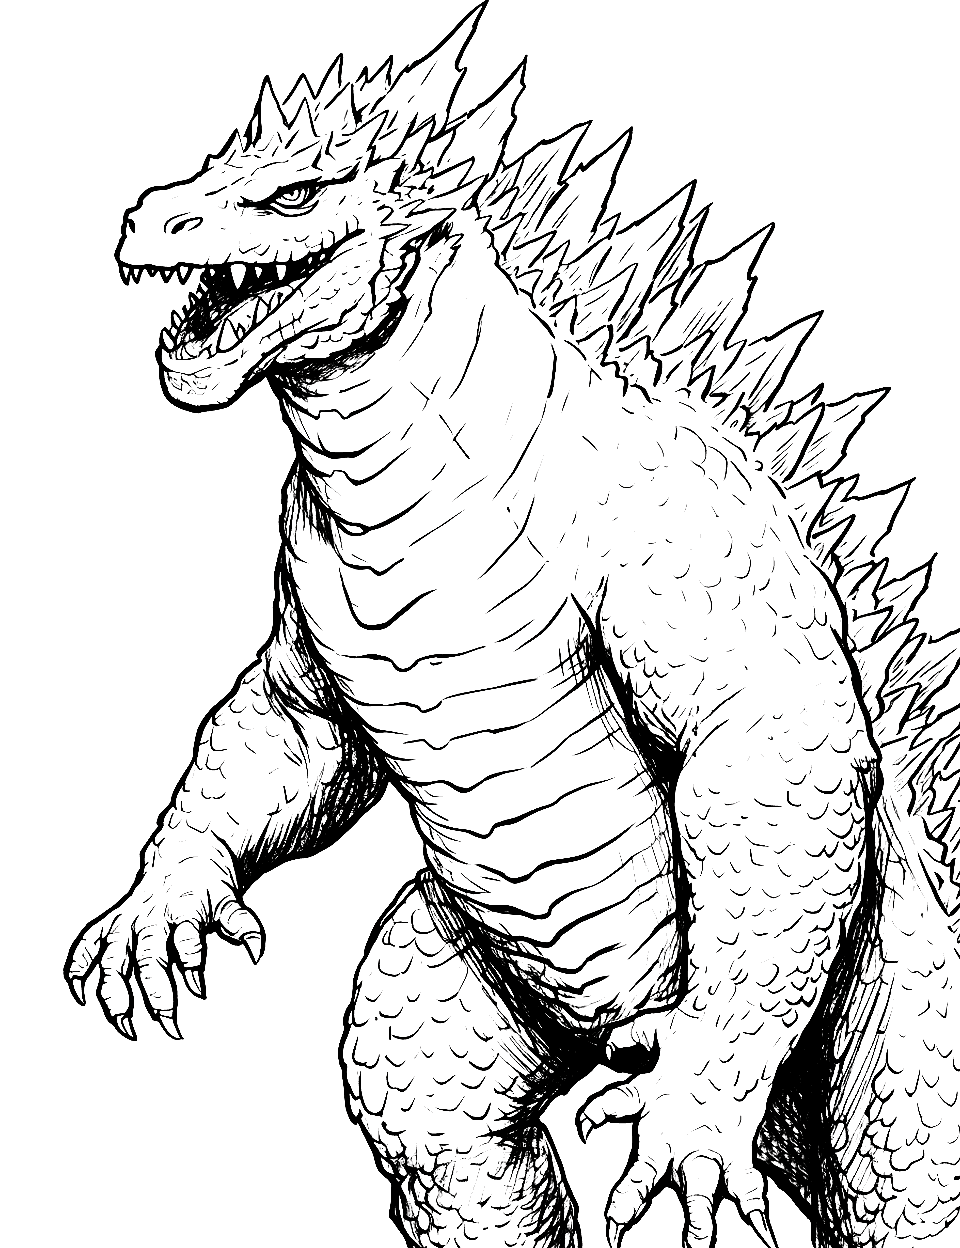 Godzilla Sketch Portrait Coloring Page - A beautiful and artistic sketch of Godzilla.